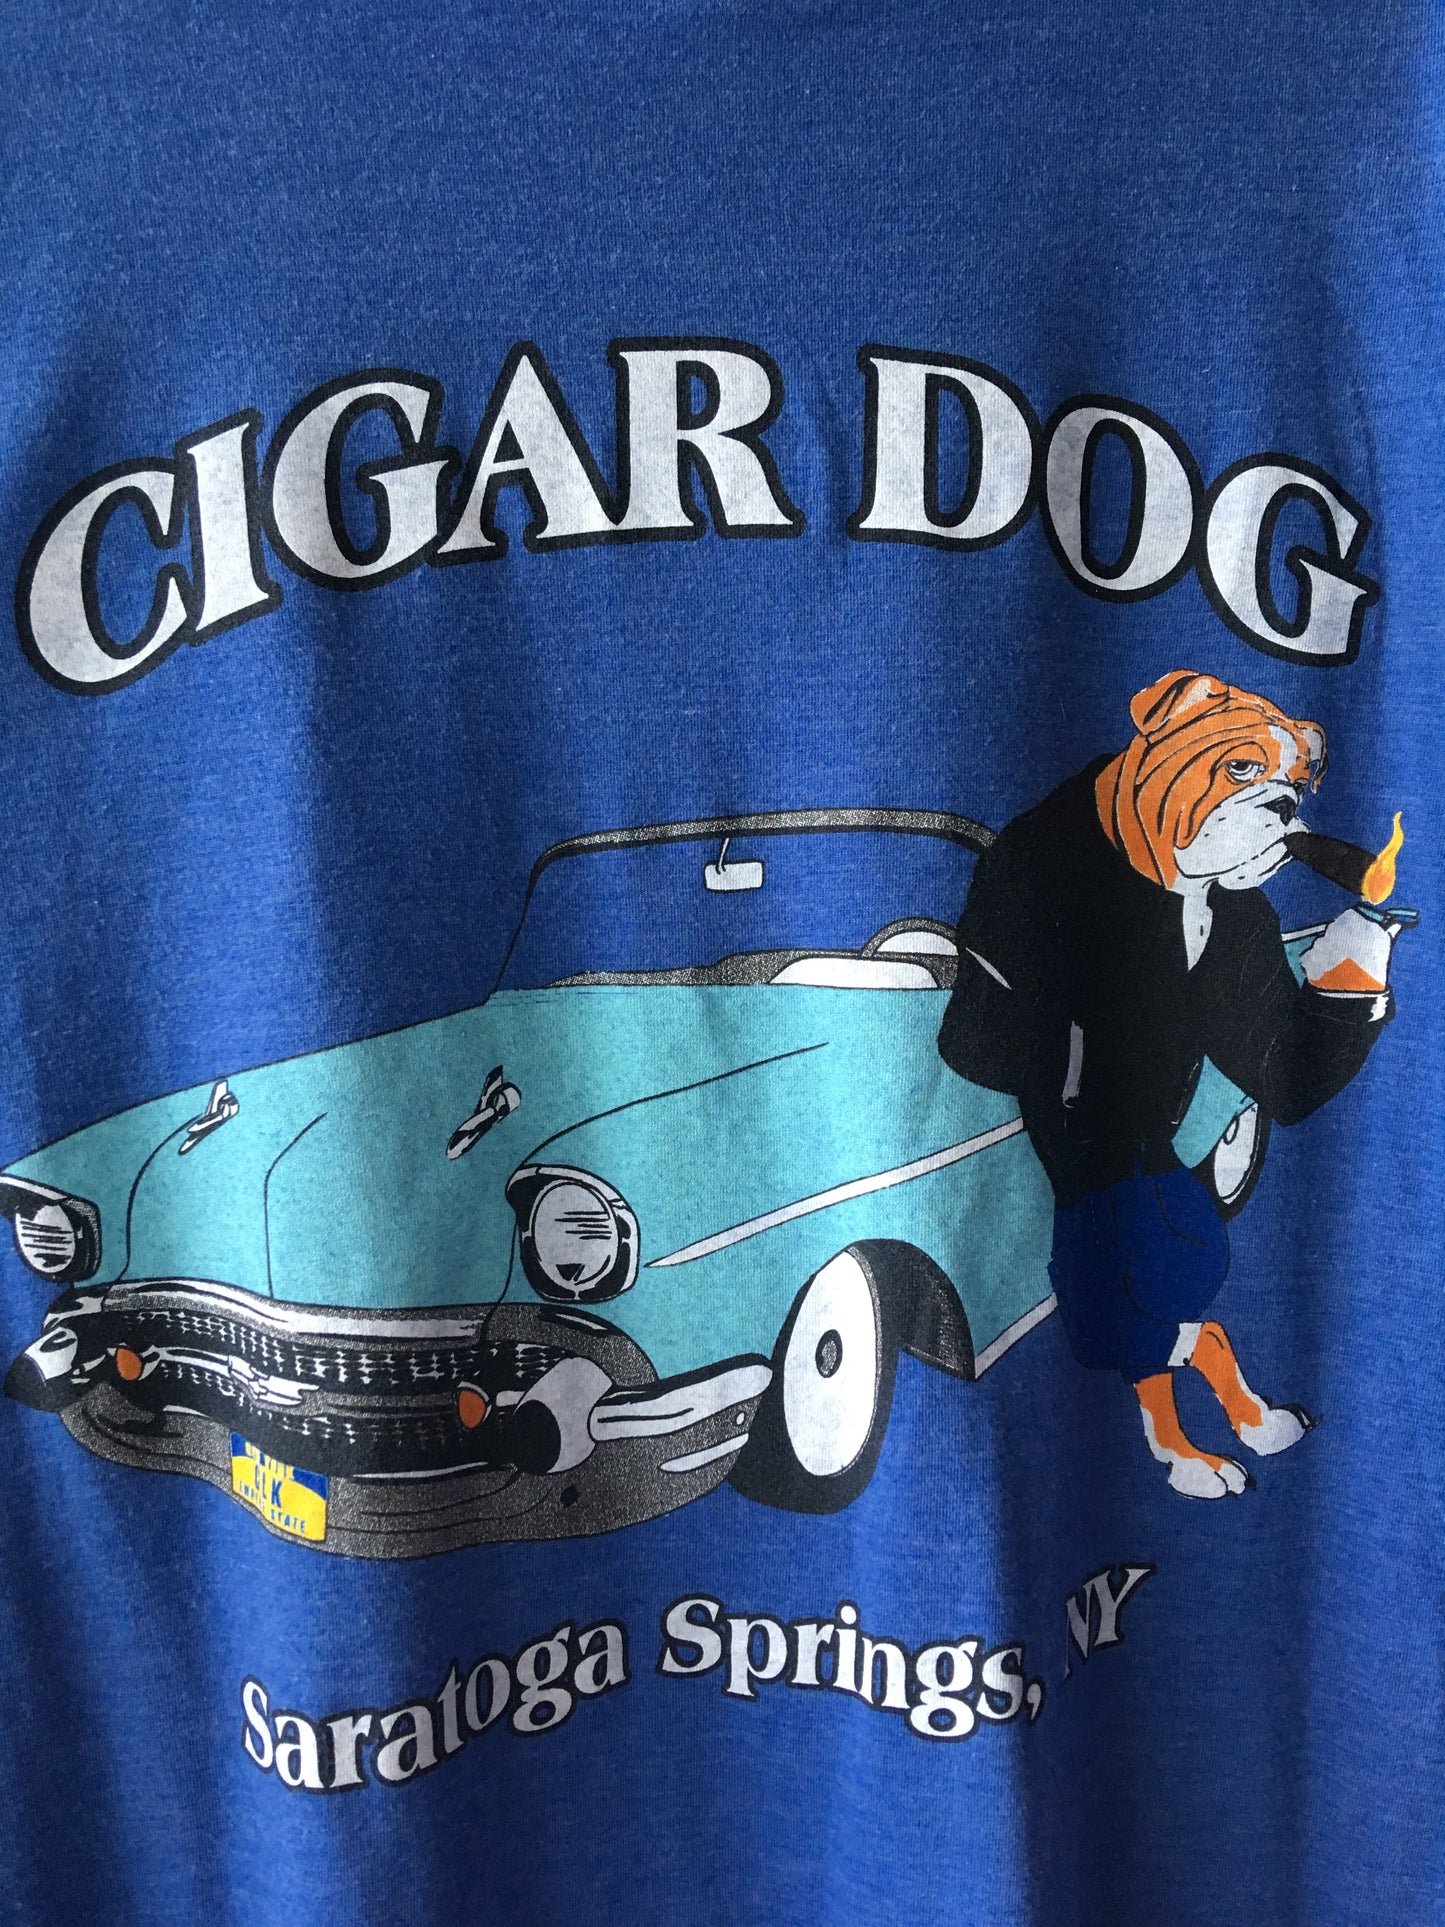 Cigar Dog T-shirt